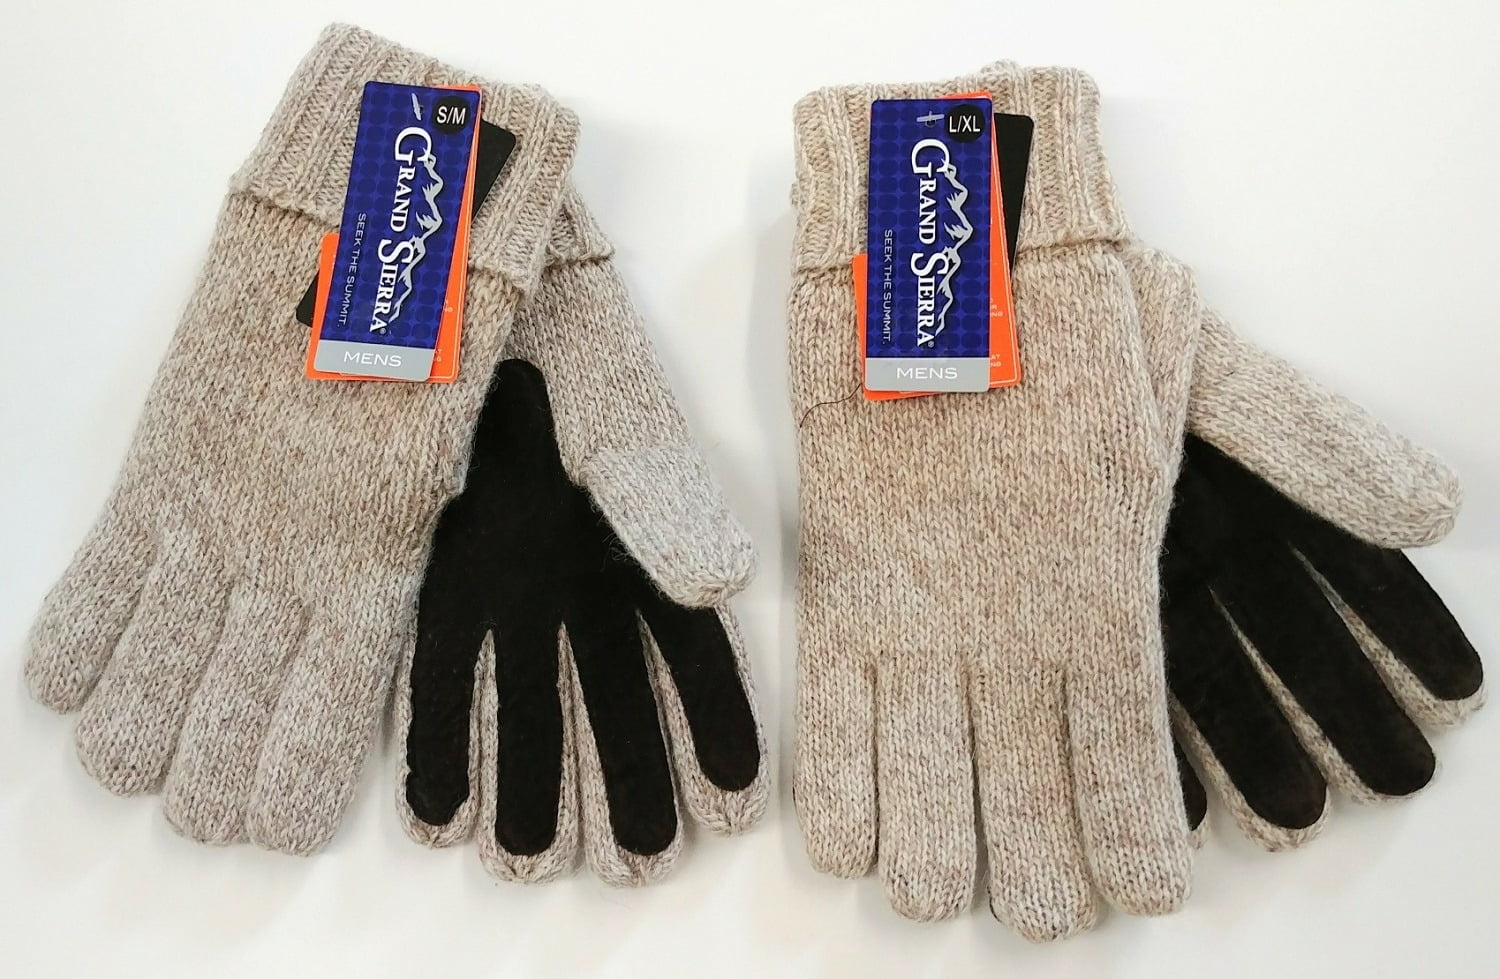 Brown Suede Palm Grand Sierra Men's Ragg Wool Insulated Winter Weather Gloves 